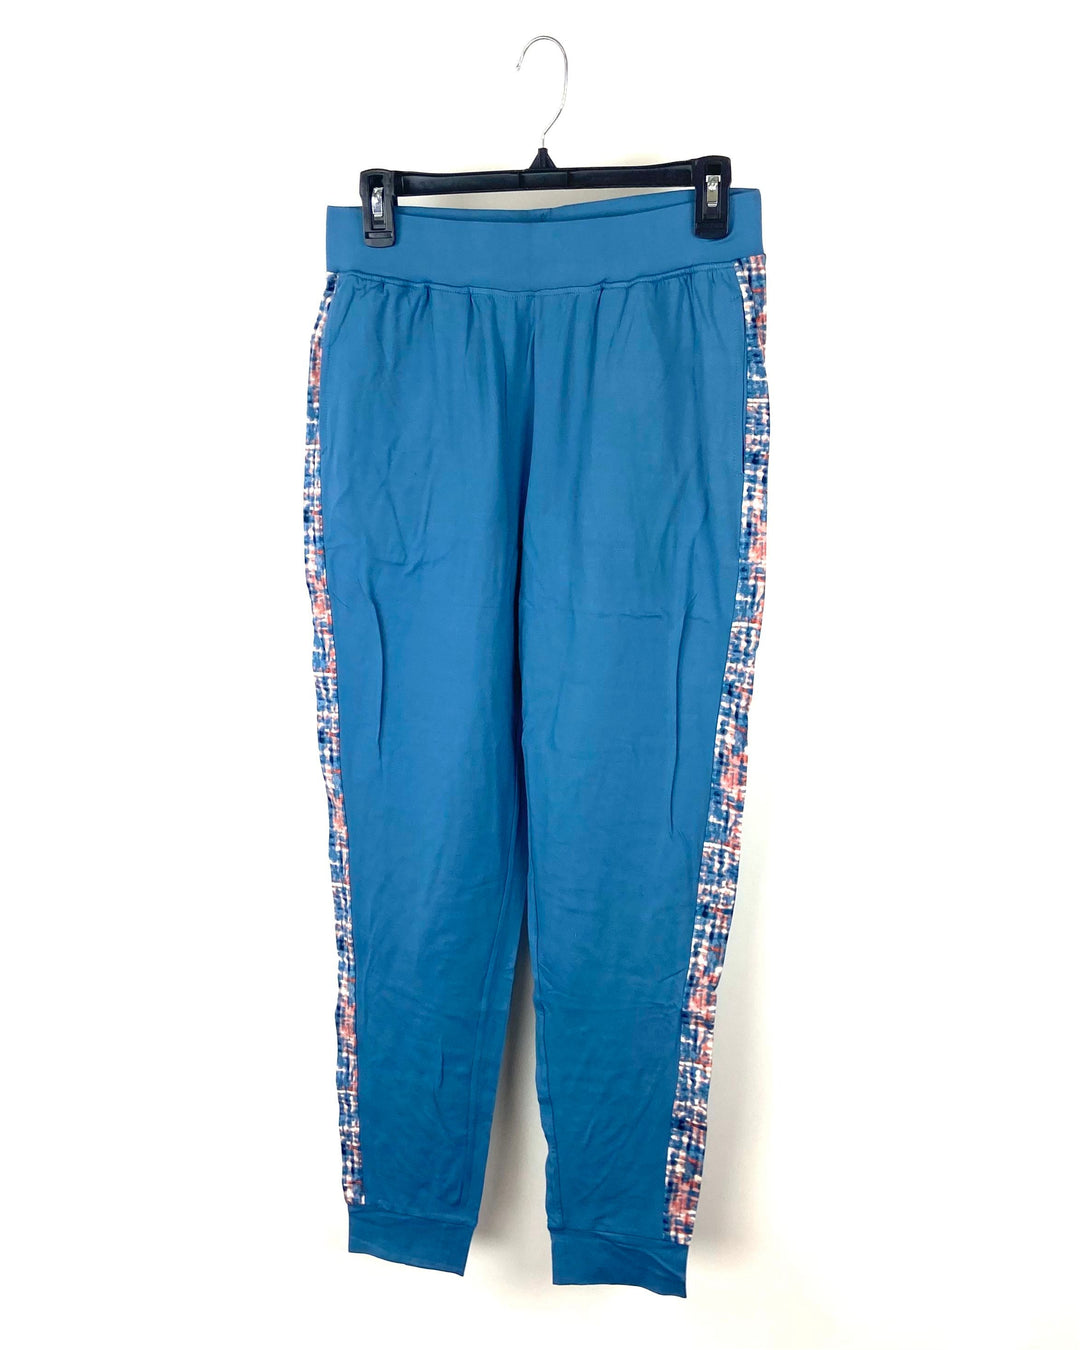 Dark Blue Sweatpants With Printed Side Stripe - Small, Medium, Large